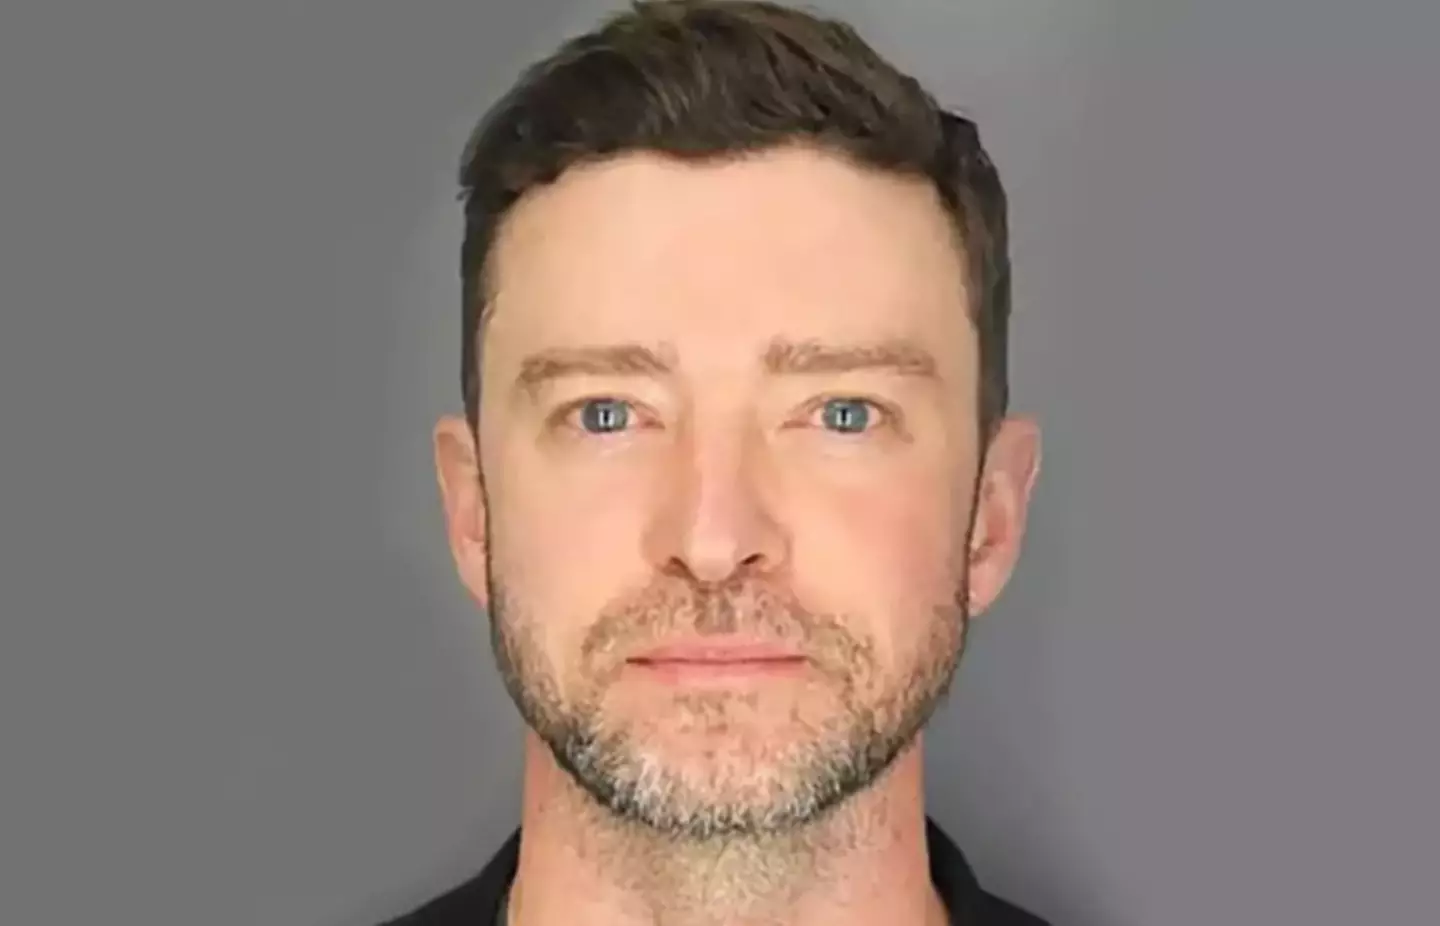 Justin Timberlake's mugshot. (Sag Harbor Police Dept)